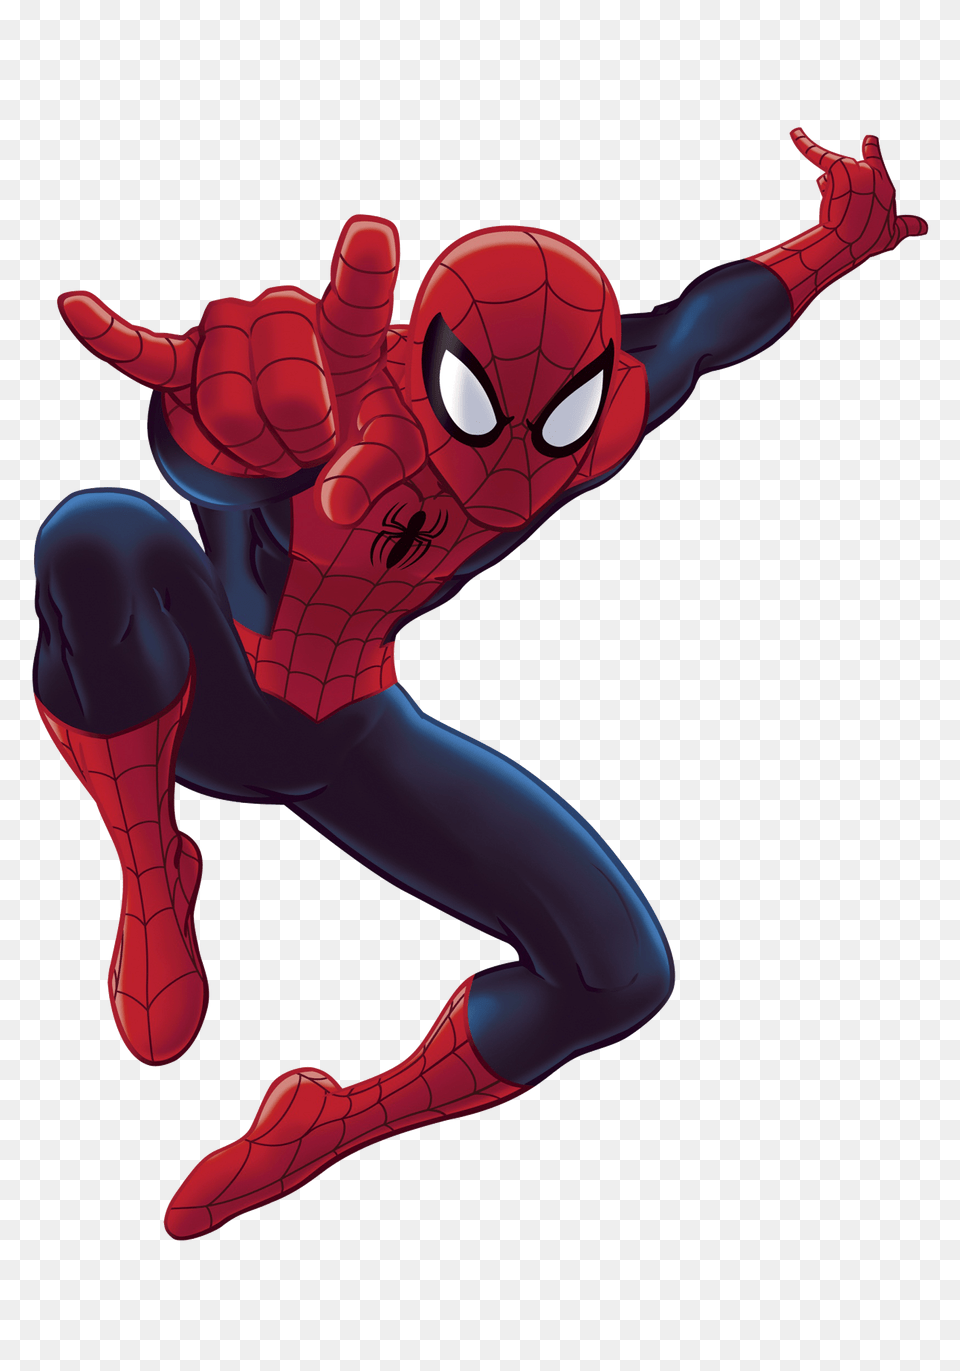 Free Spiderman Transparent Background, Smoke Pipe, Cartoon Png